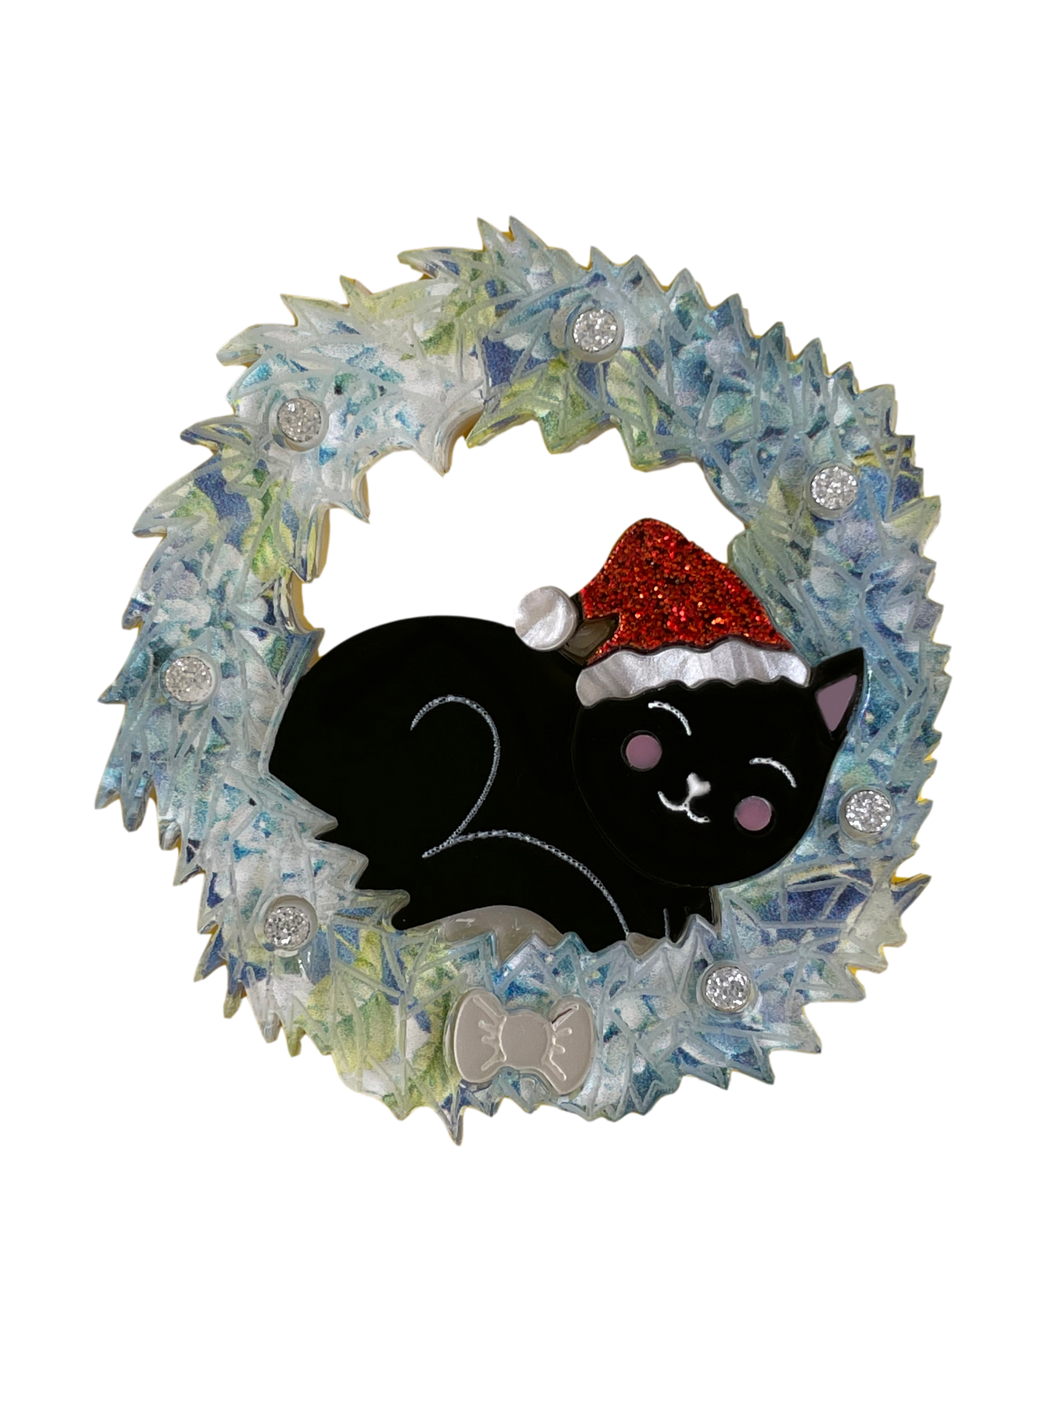 Max the Christmas black kitty